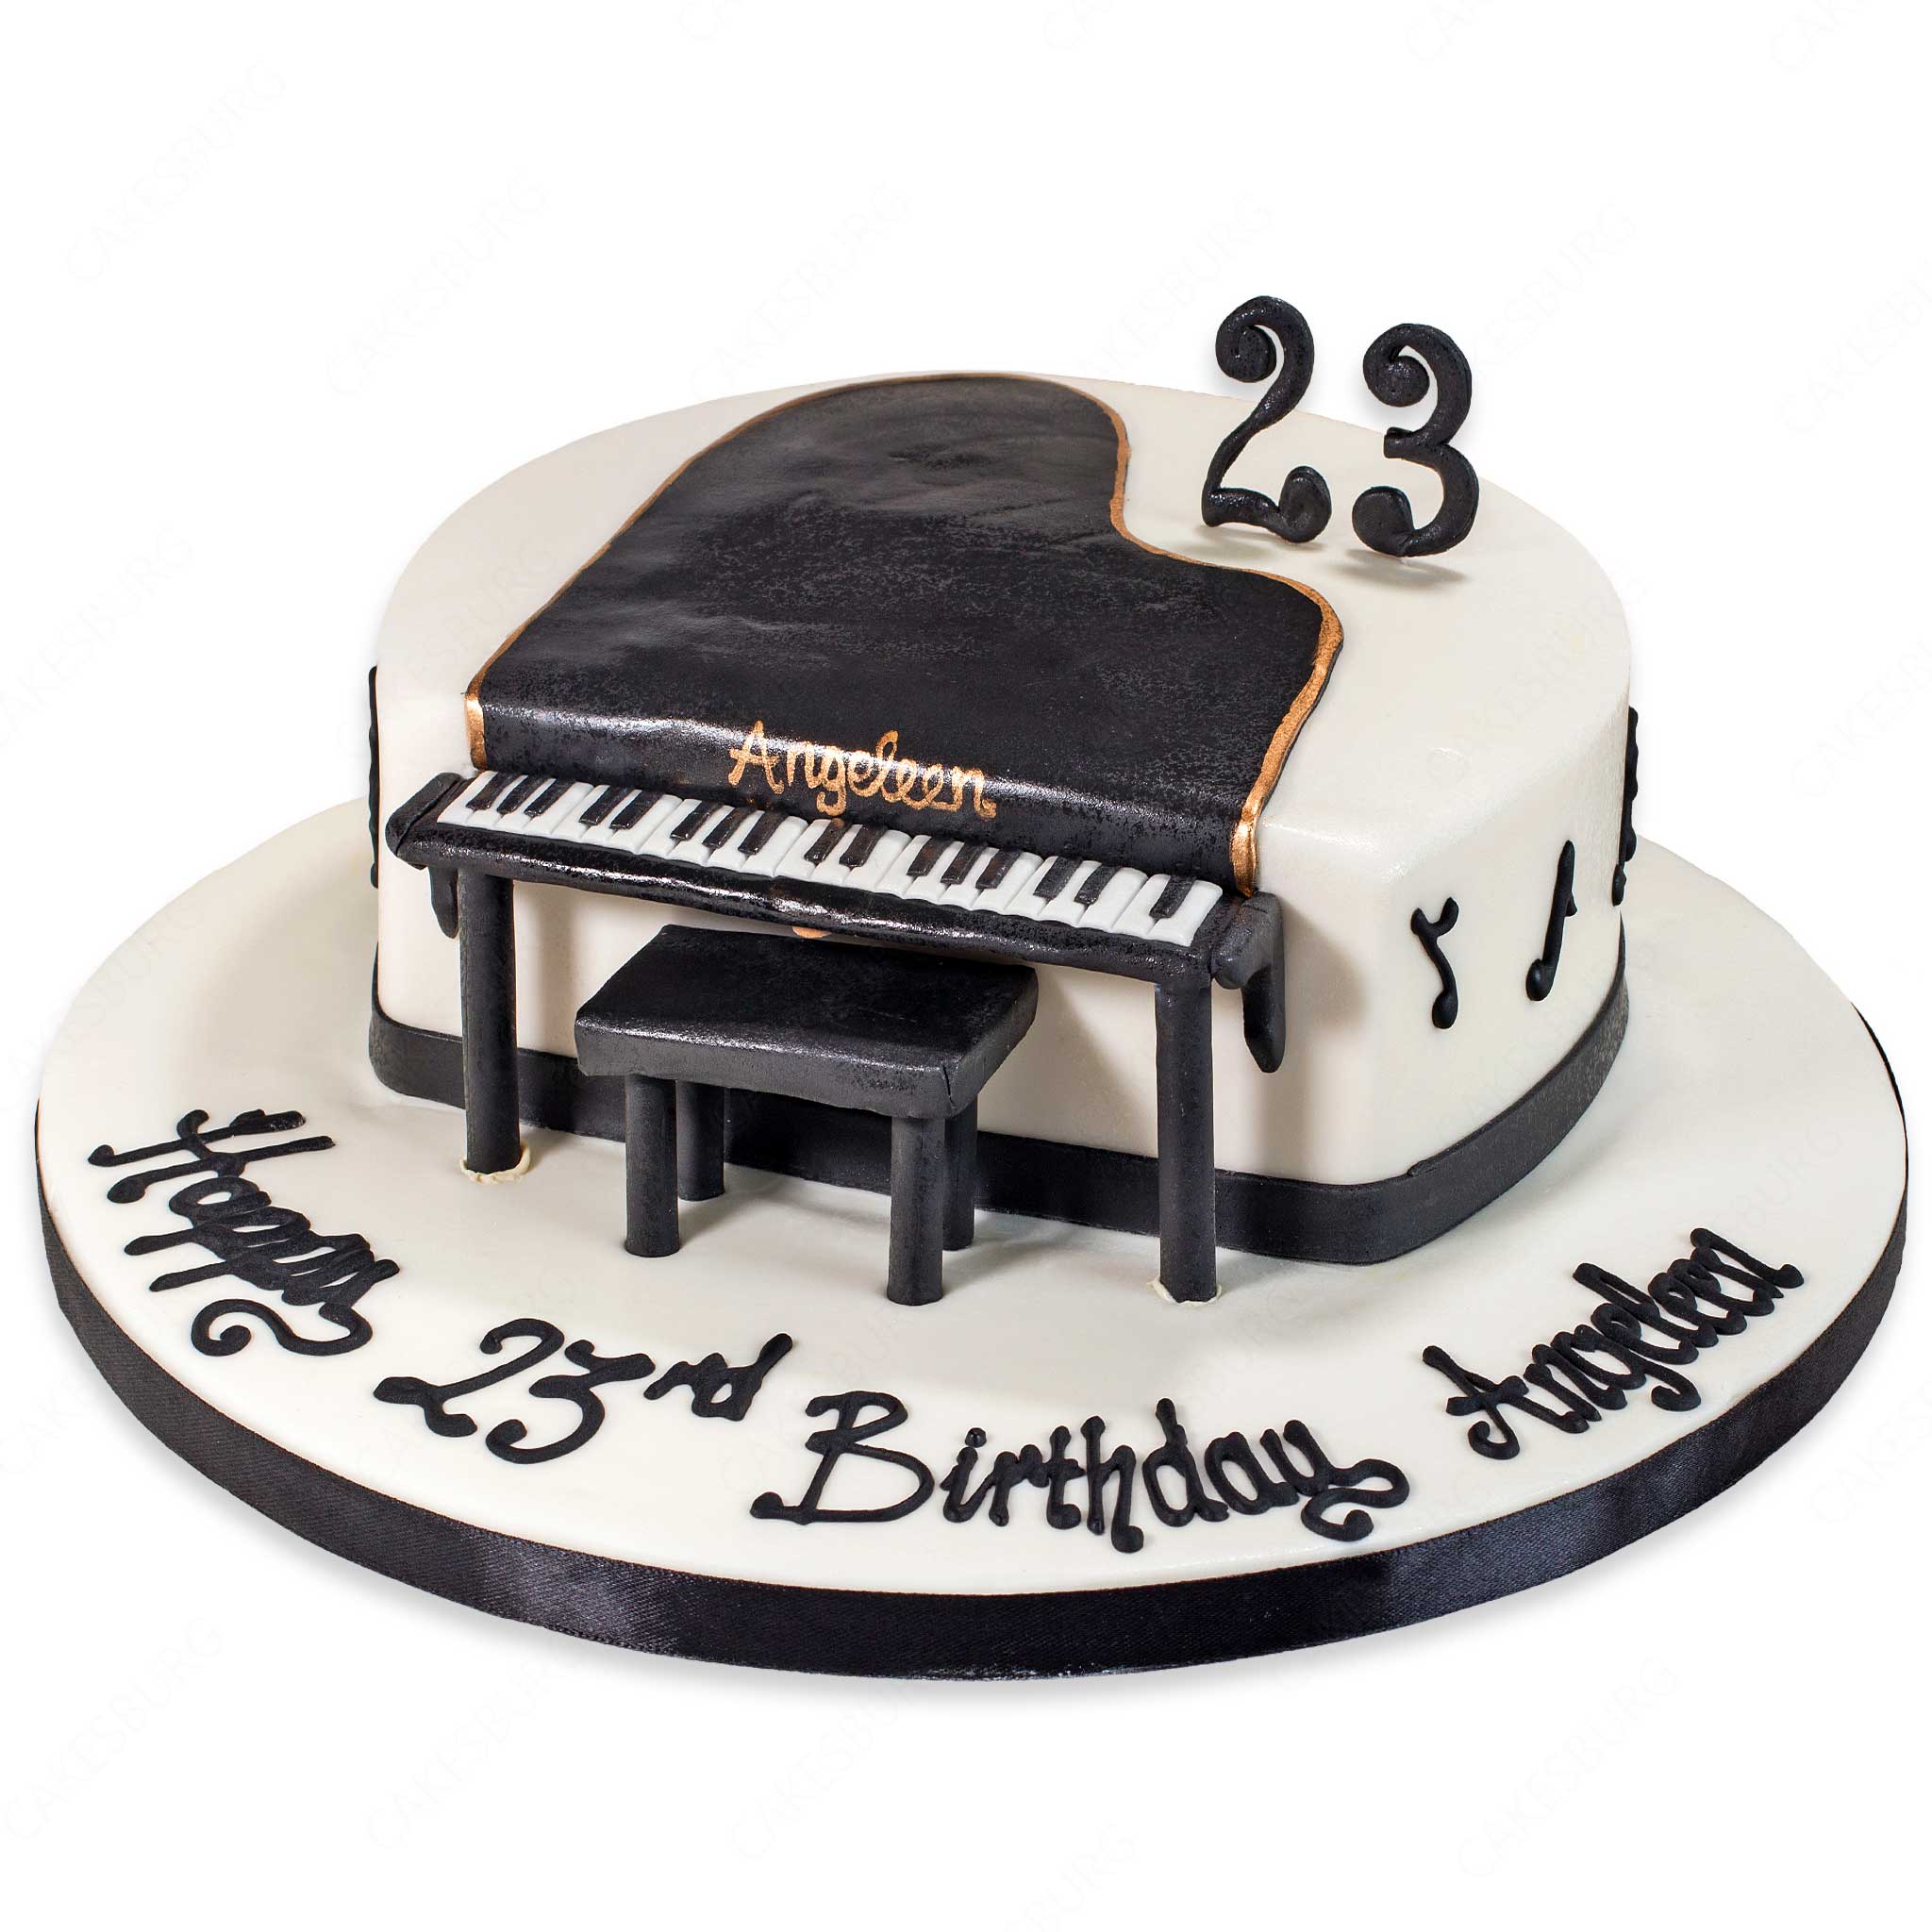 Handmade edible Nikon Camera Cake Topper, birthday, Casio | eBay